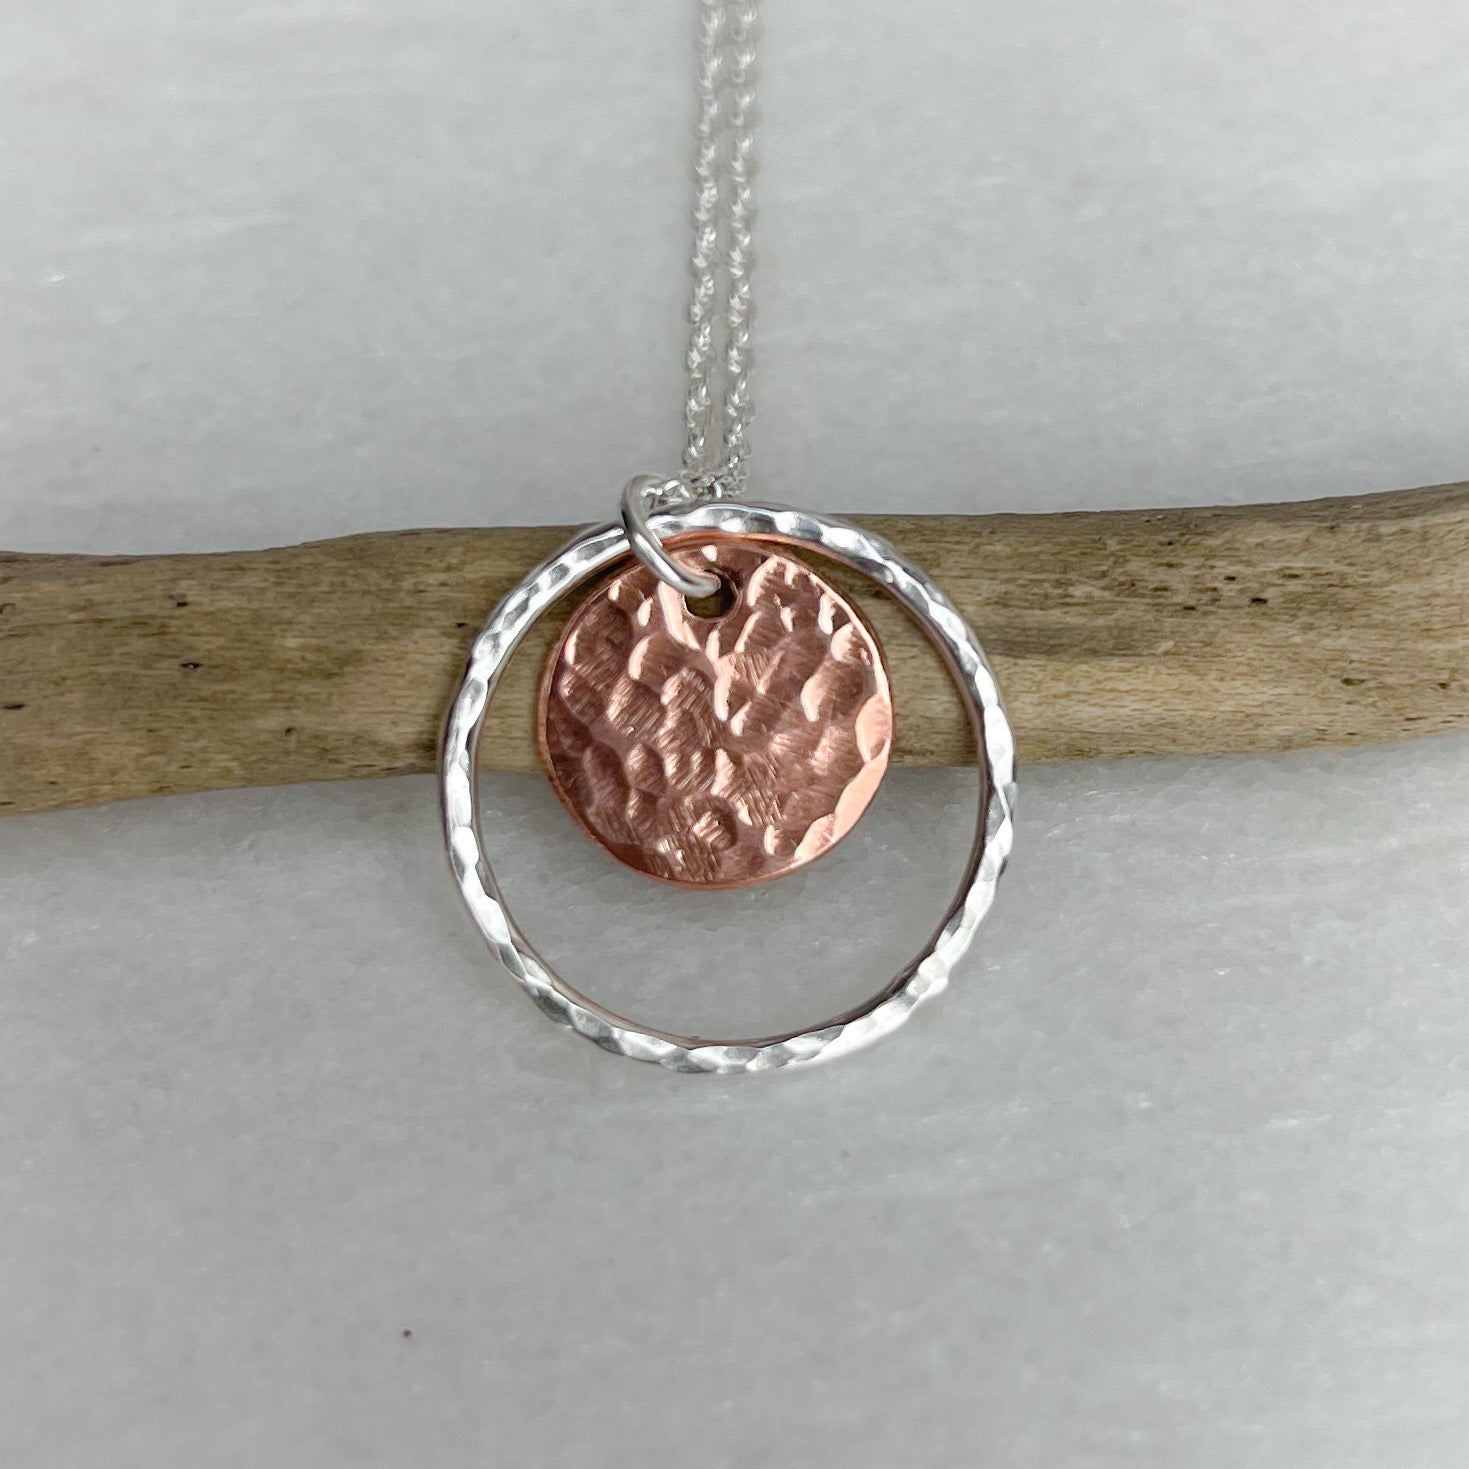 Copper Disc Necklace - The Nancy Smillie Shop - Art, Jewellery & Designer Gifts Glasgow